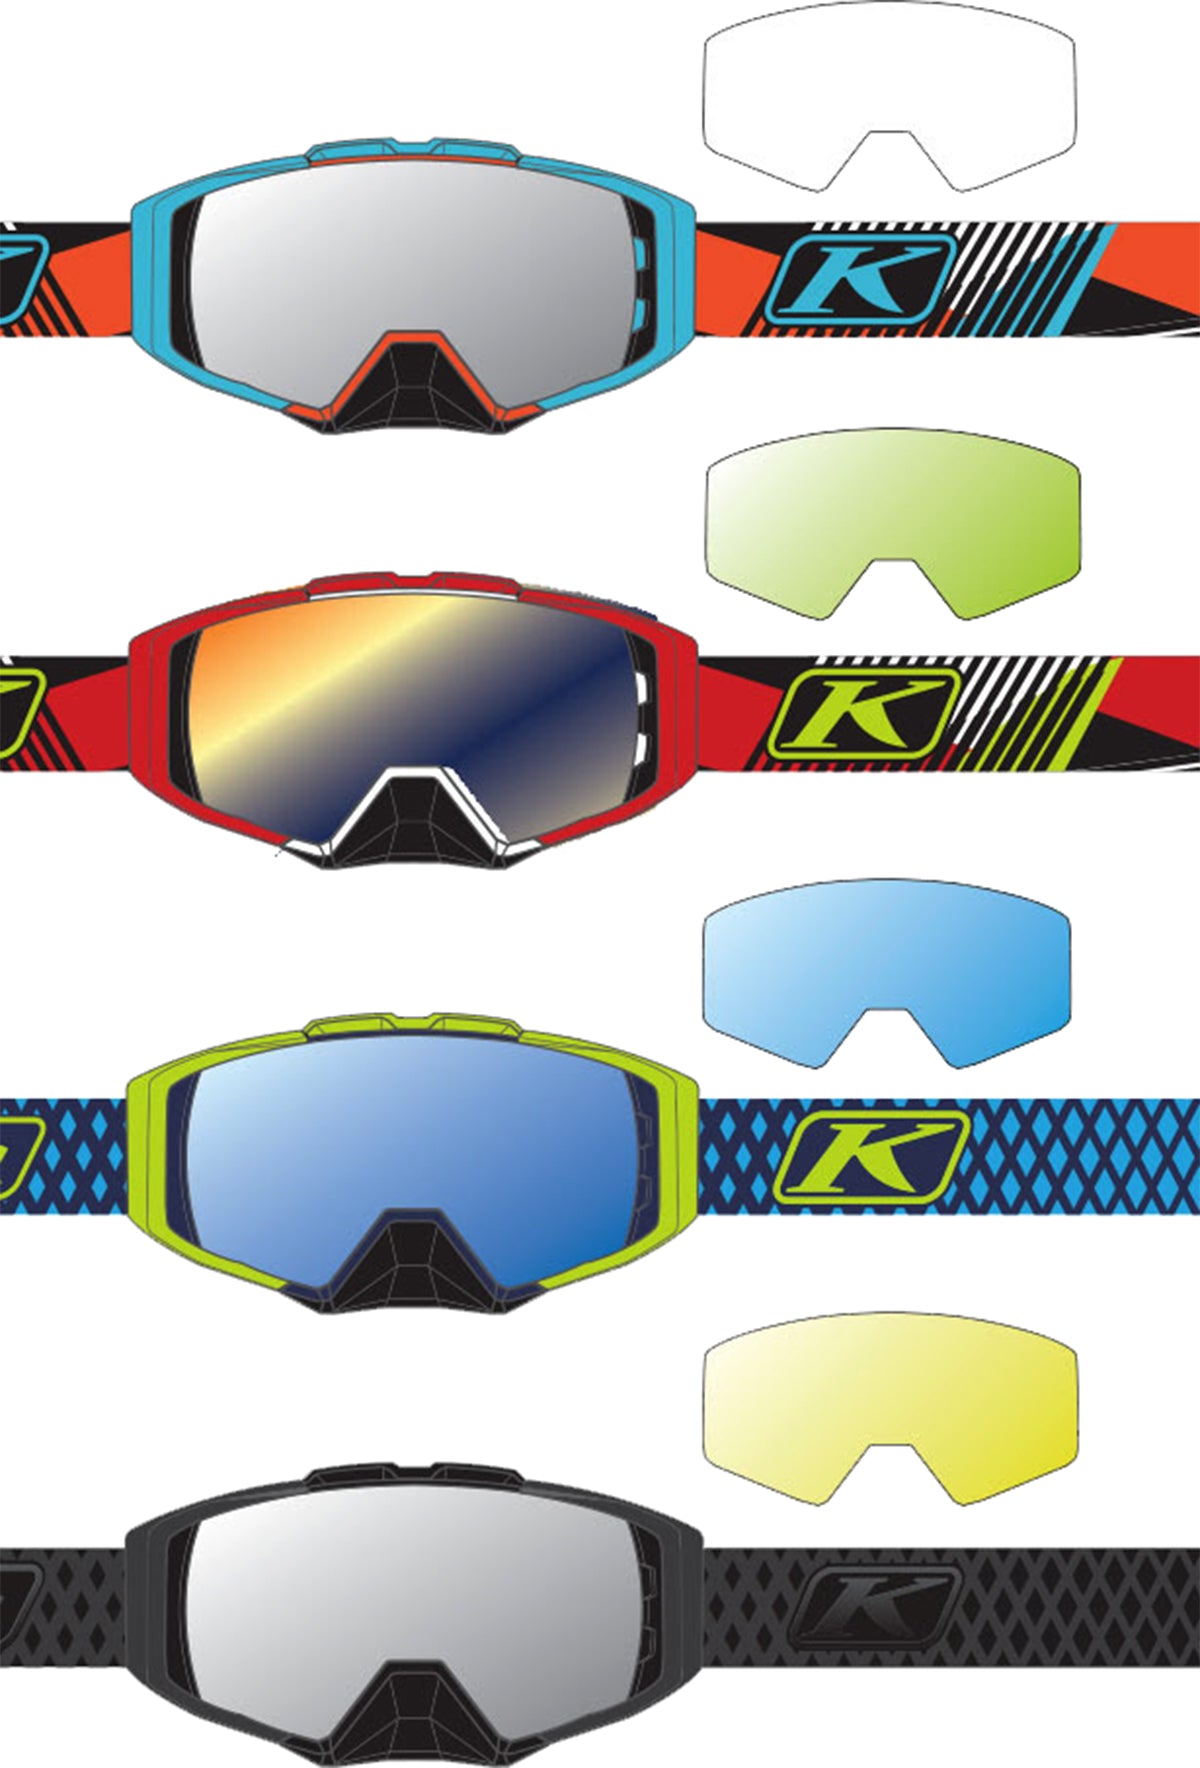 Klim Snow 2017 Winter Sports Goggles